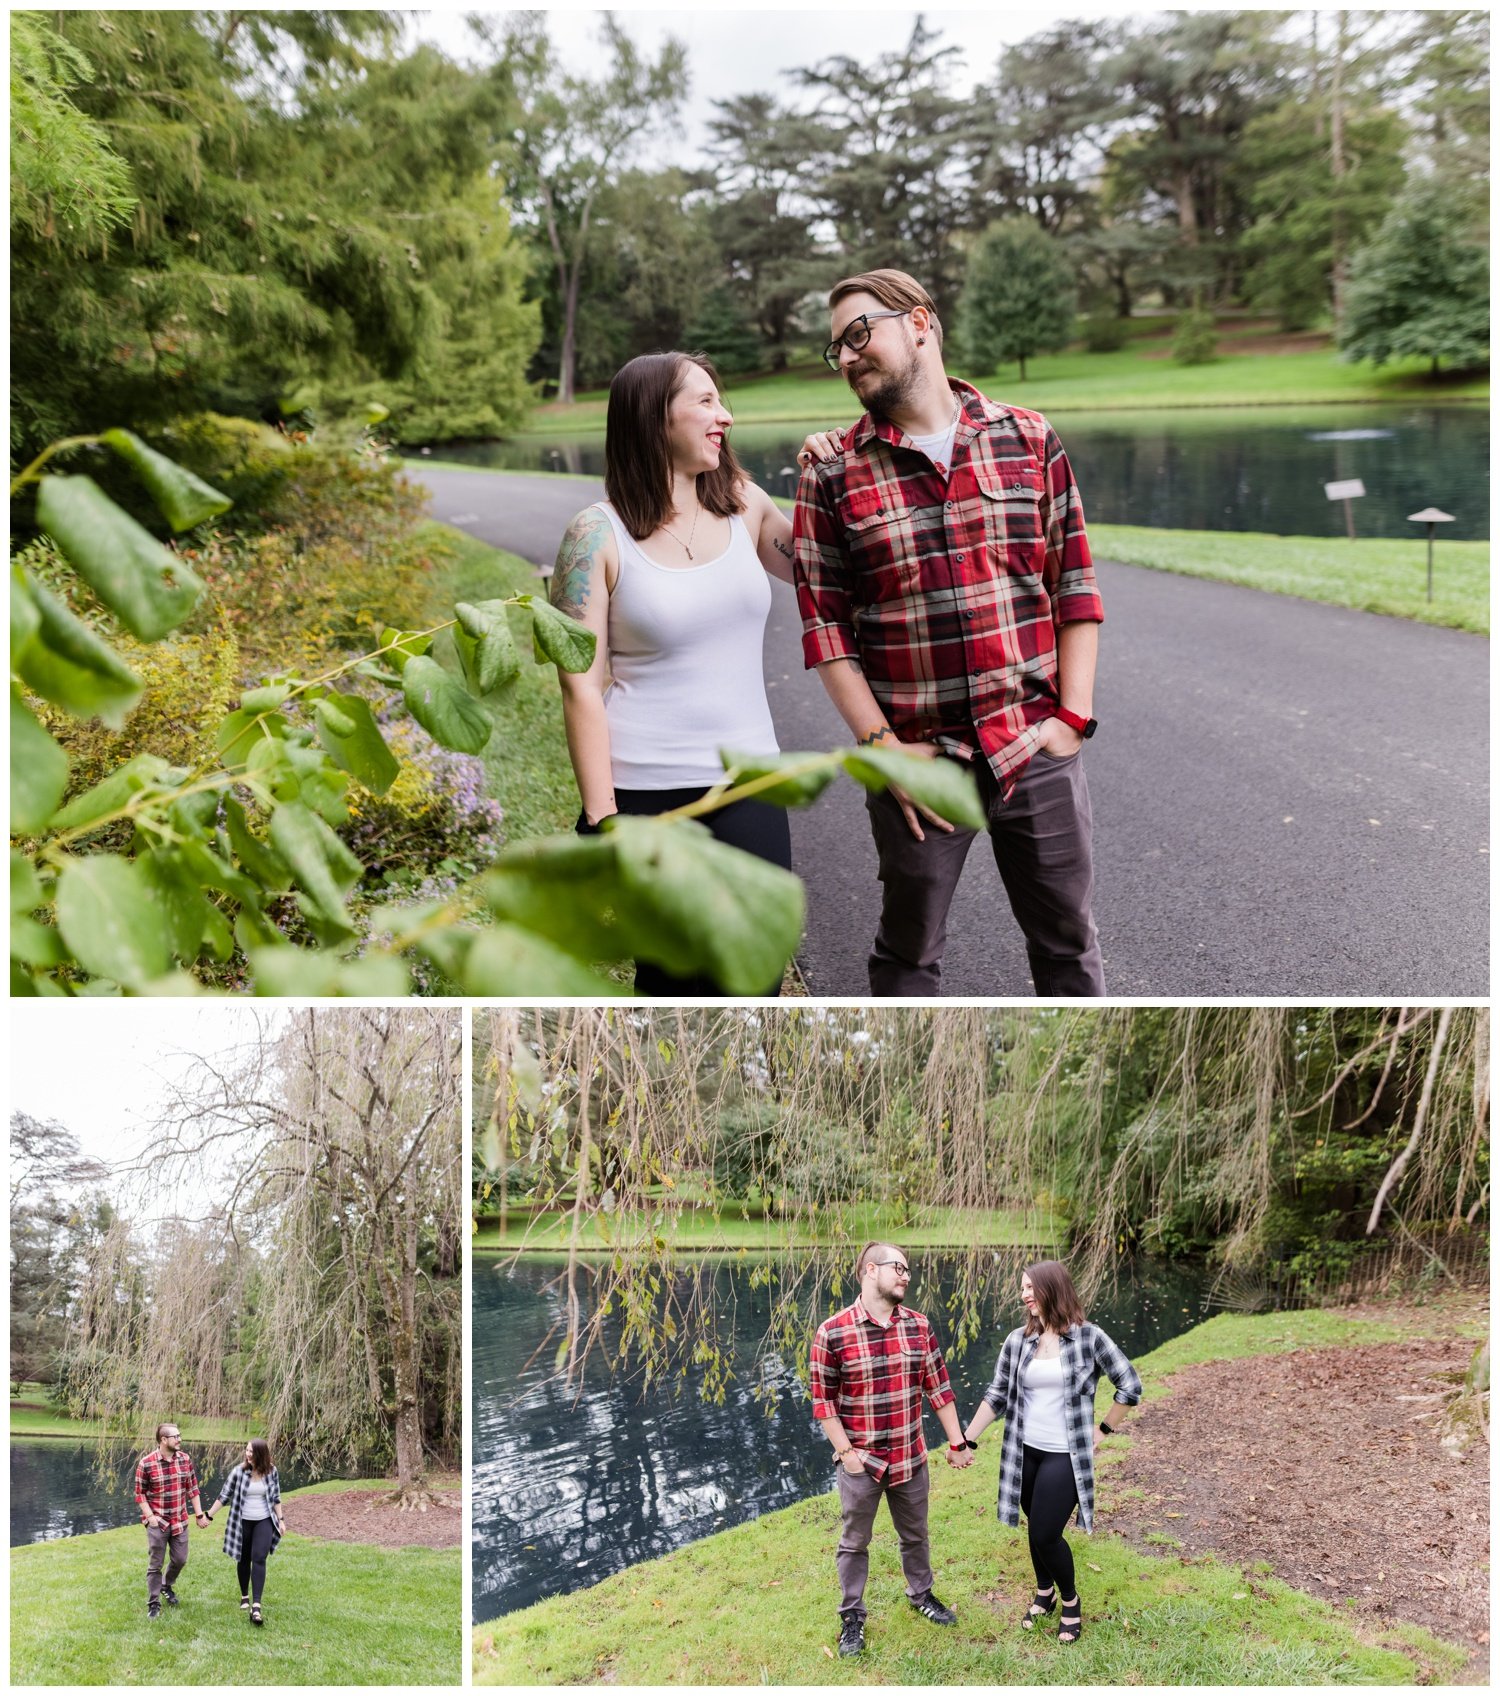 Nerdy-Inspired-Engagement-Photos-at-Longwood-Gardens-1.jpg